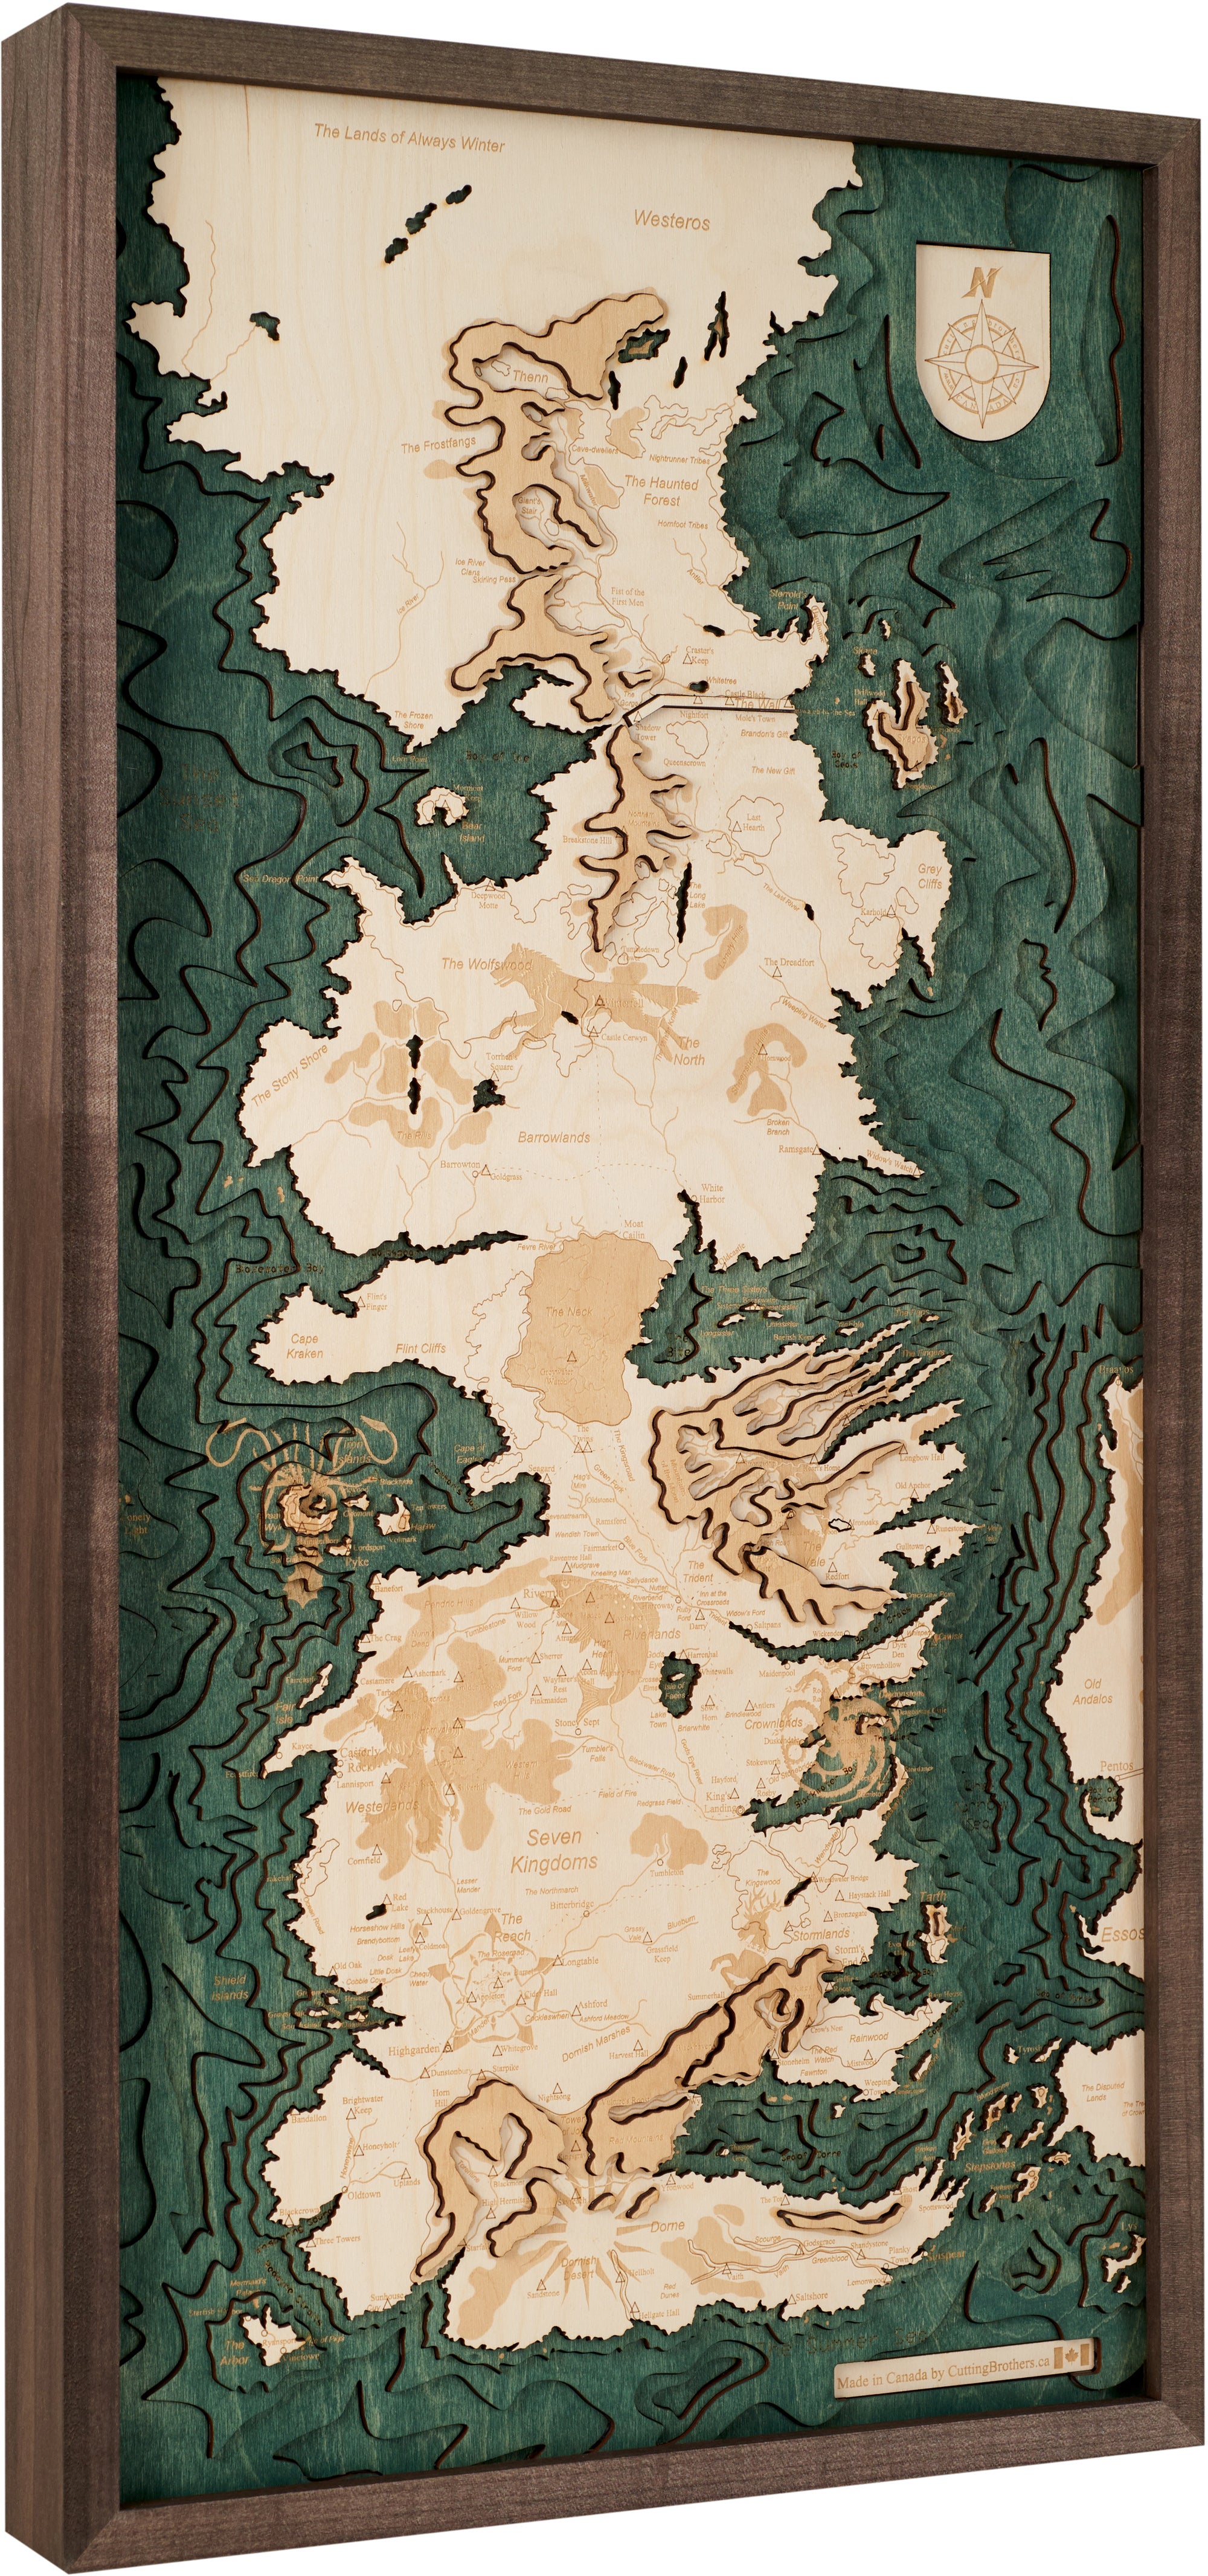 GOT WESTEROS SEVEN KINGDOMS 3D Wooden Wall Map - Version M 